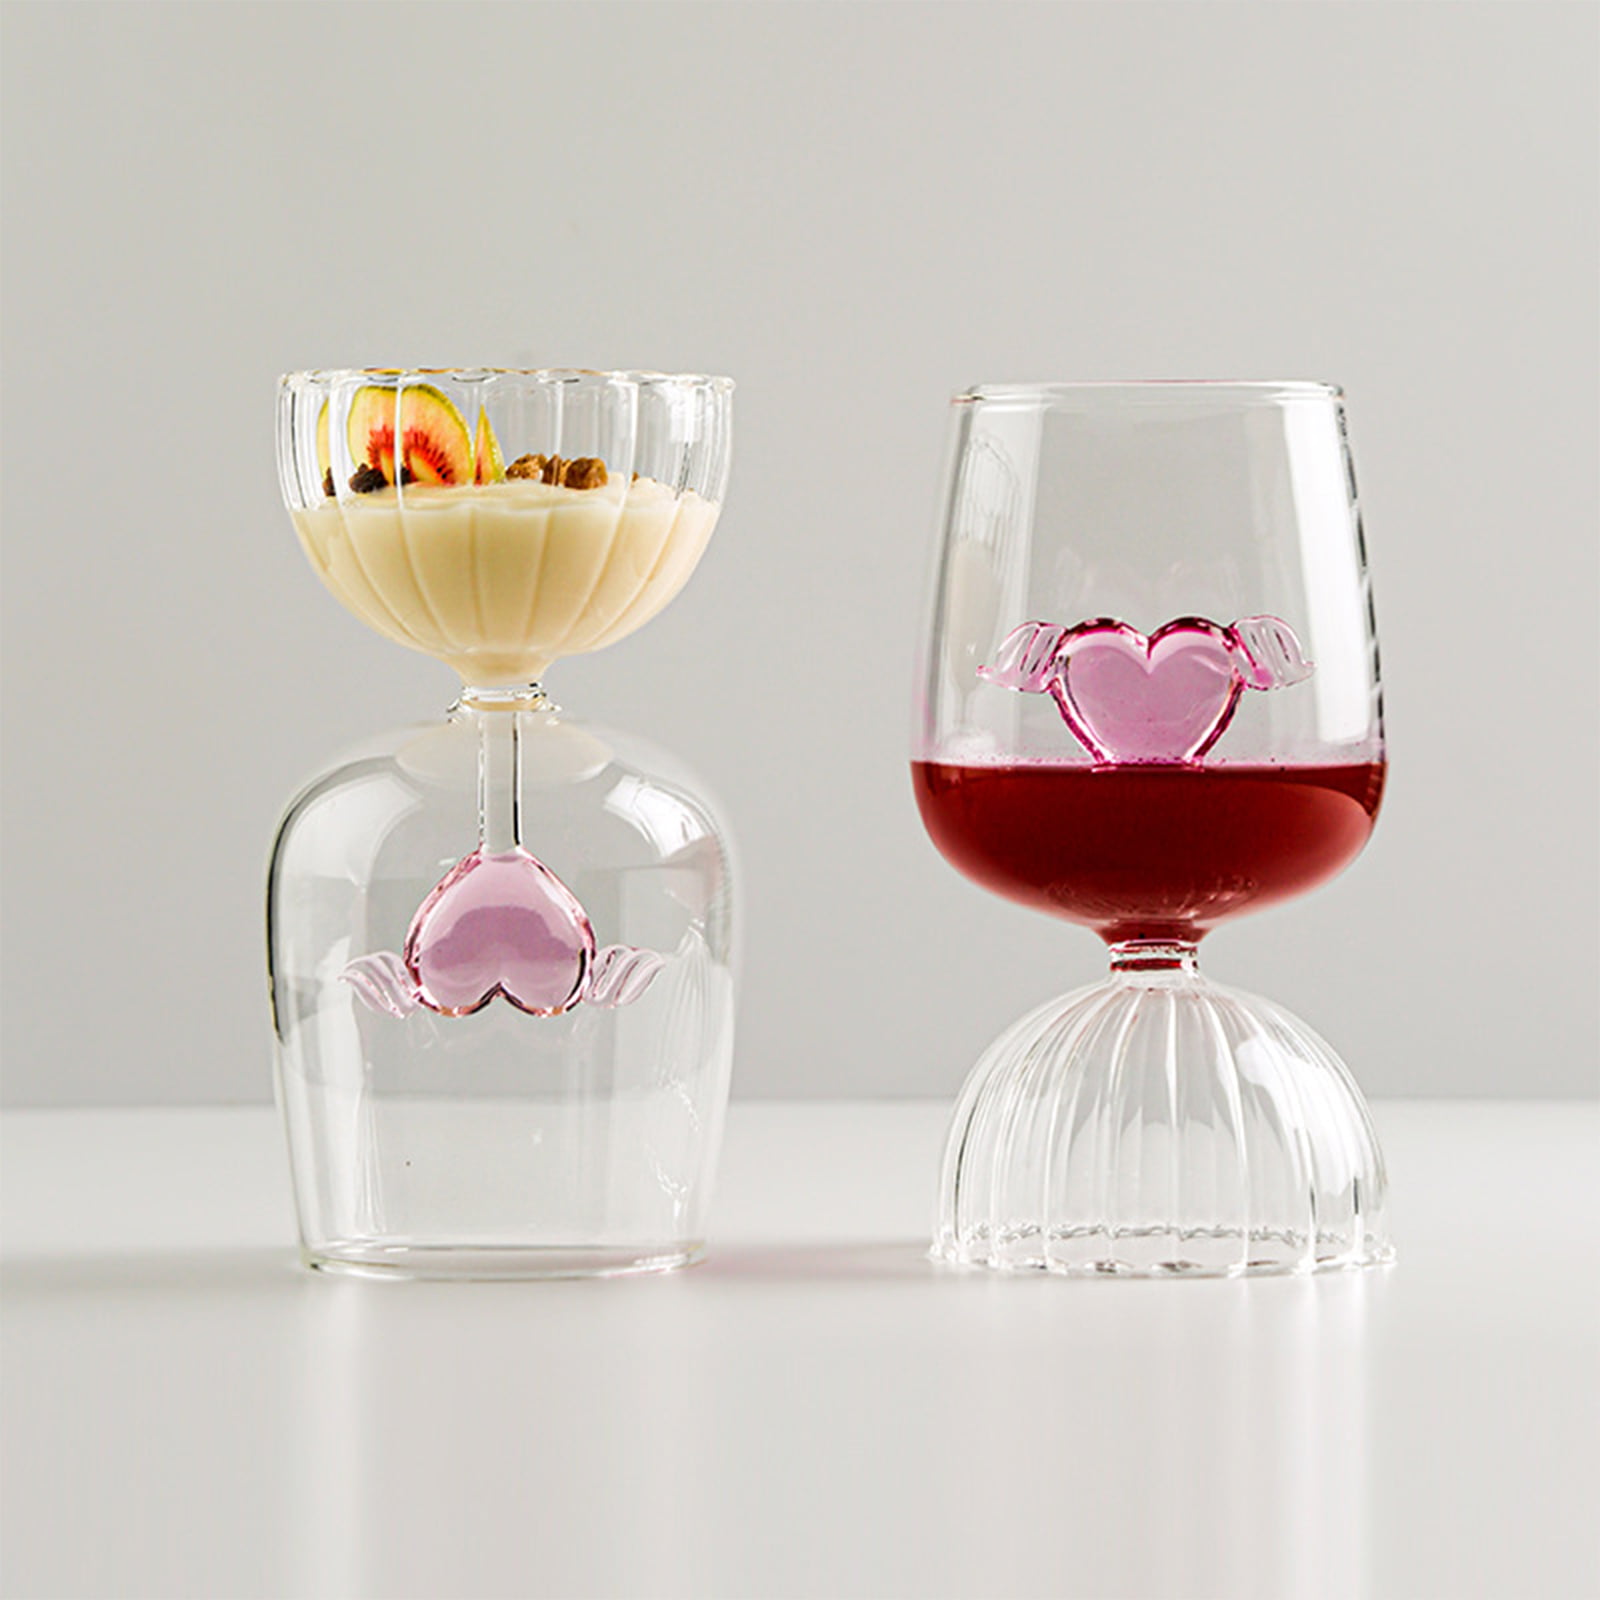 WINE GLASSES HEART STYLE 17 FL.OZ - WINE GLASSES - LuxBe Store